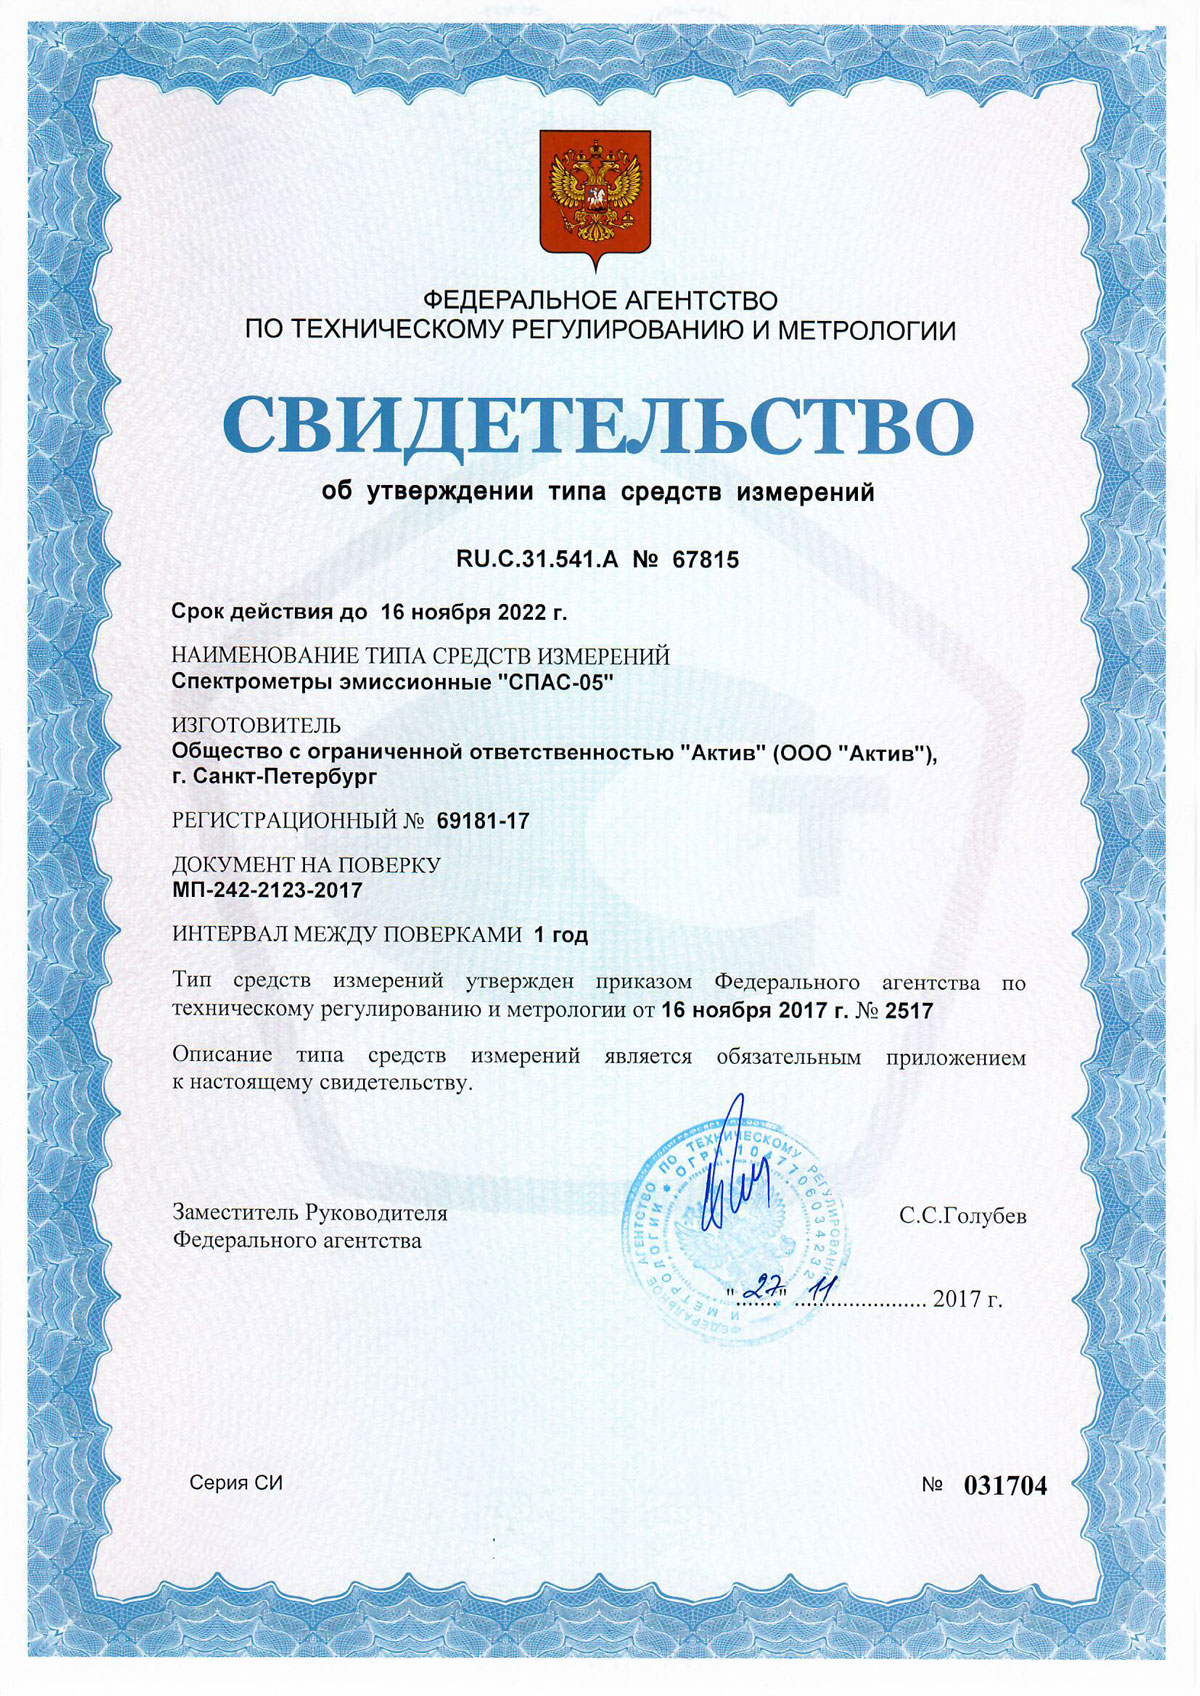 SPAS-05 certificate